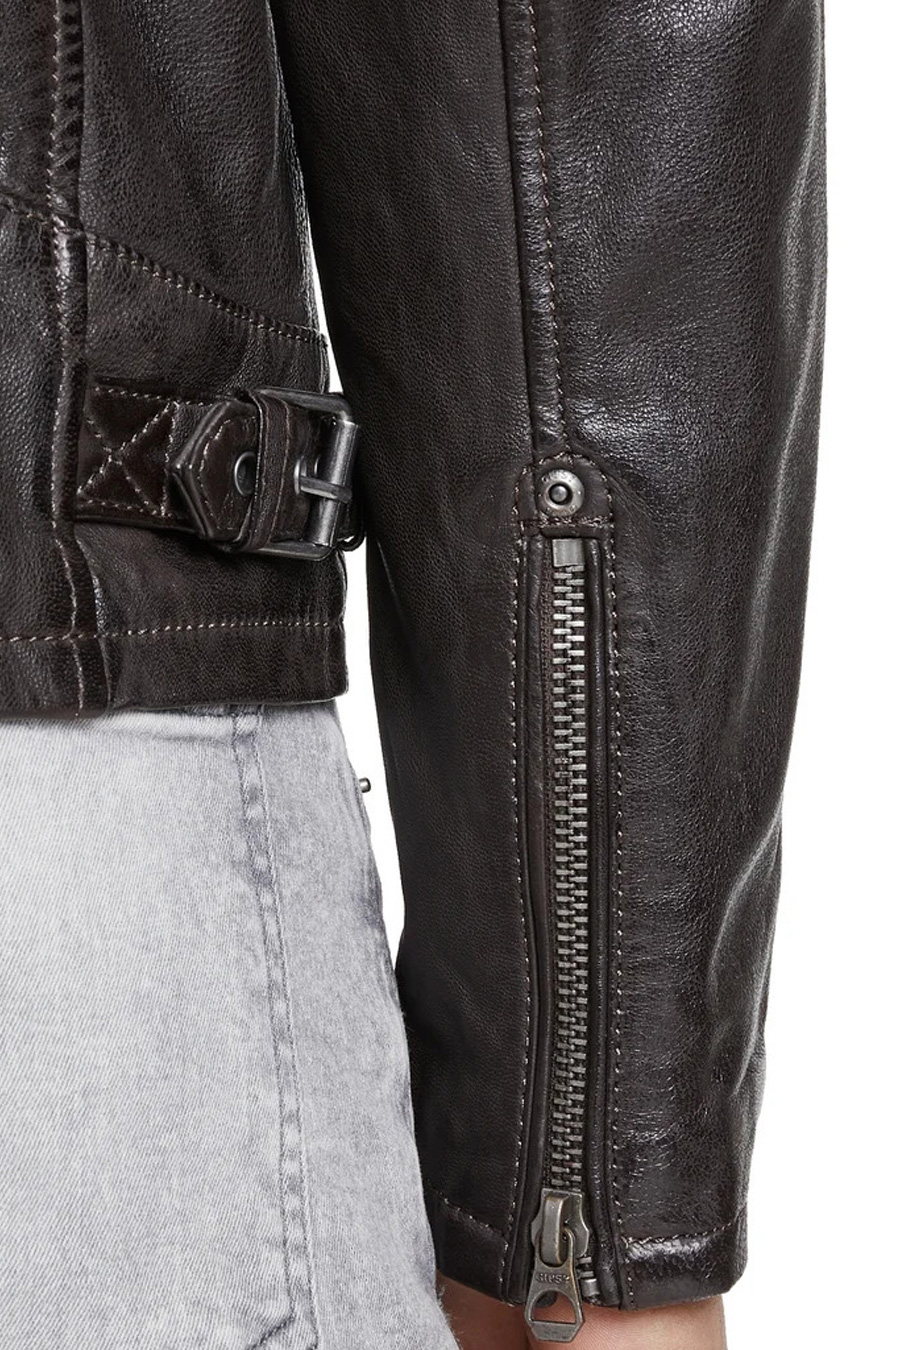 Leather jacket GIPSY Rylo-LAKEV-BIO-DARK-BROW